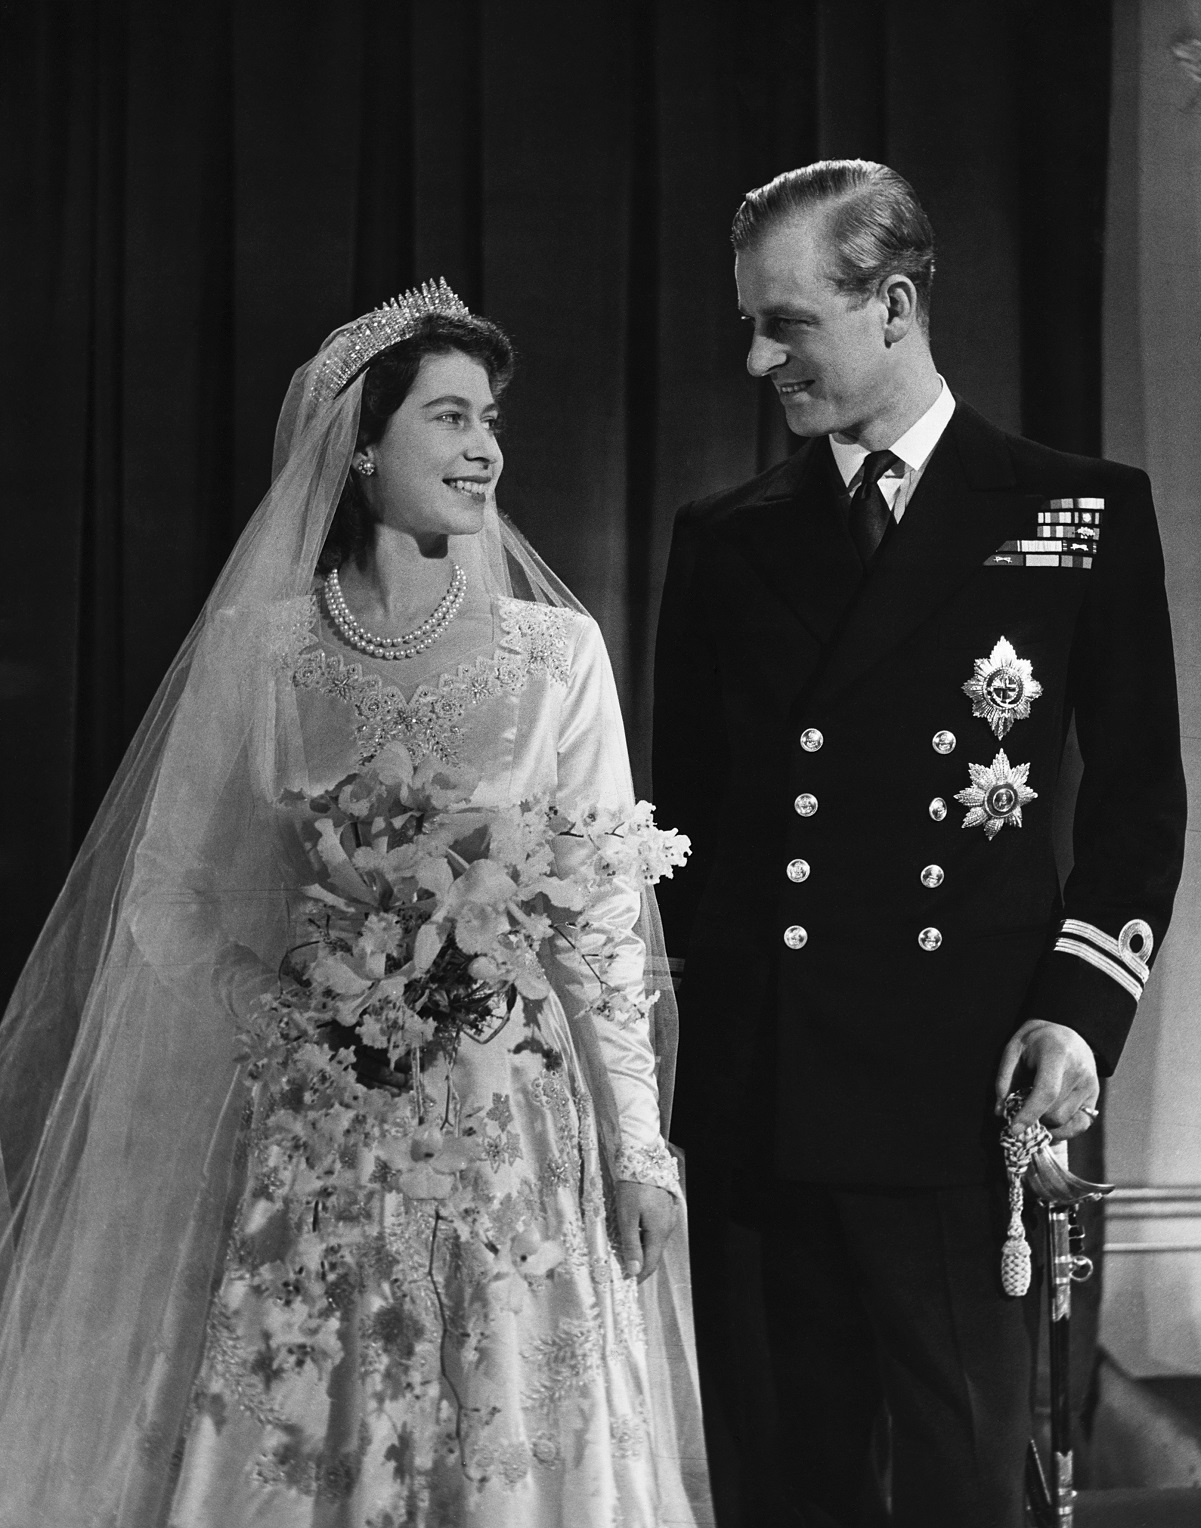 Princess Elizabeth later Queen Elizabeth II and her husband Philip smiling for their wedding portrait